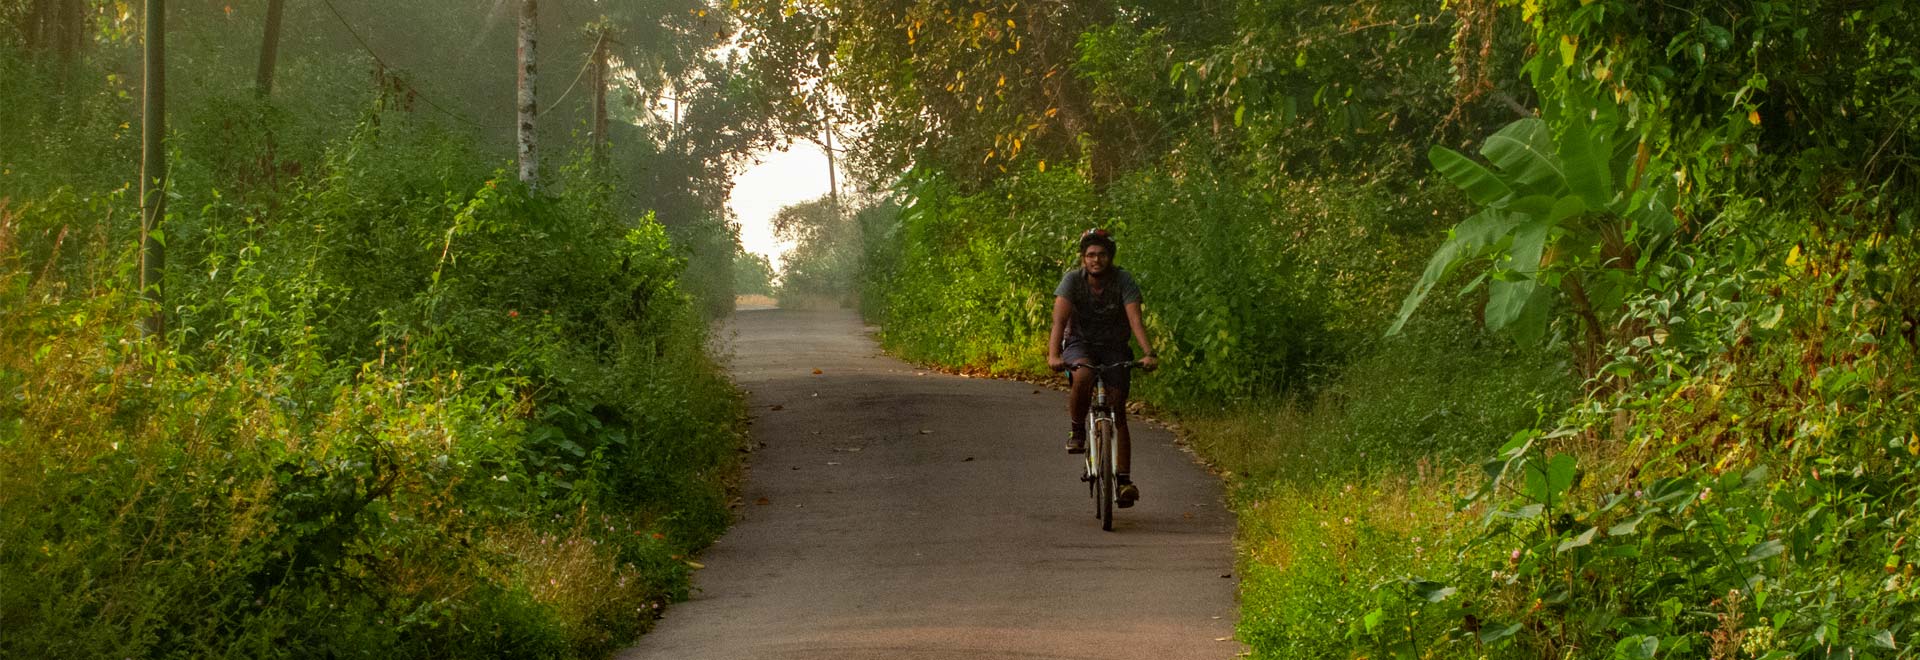 Cycle Rides India - Coastal Cycling Tour Coastal Karnataka, Mulki, Karnataka, India